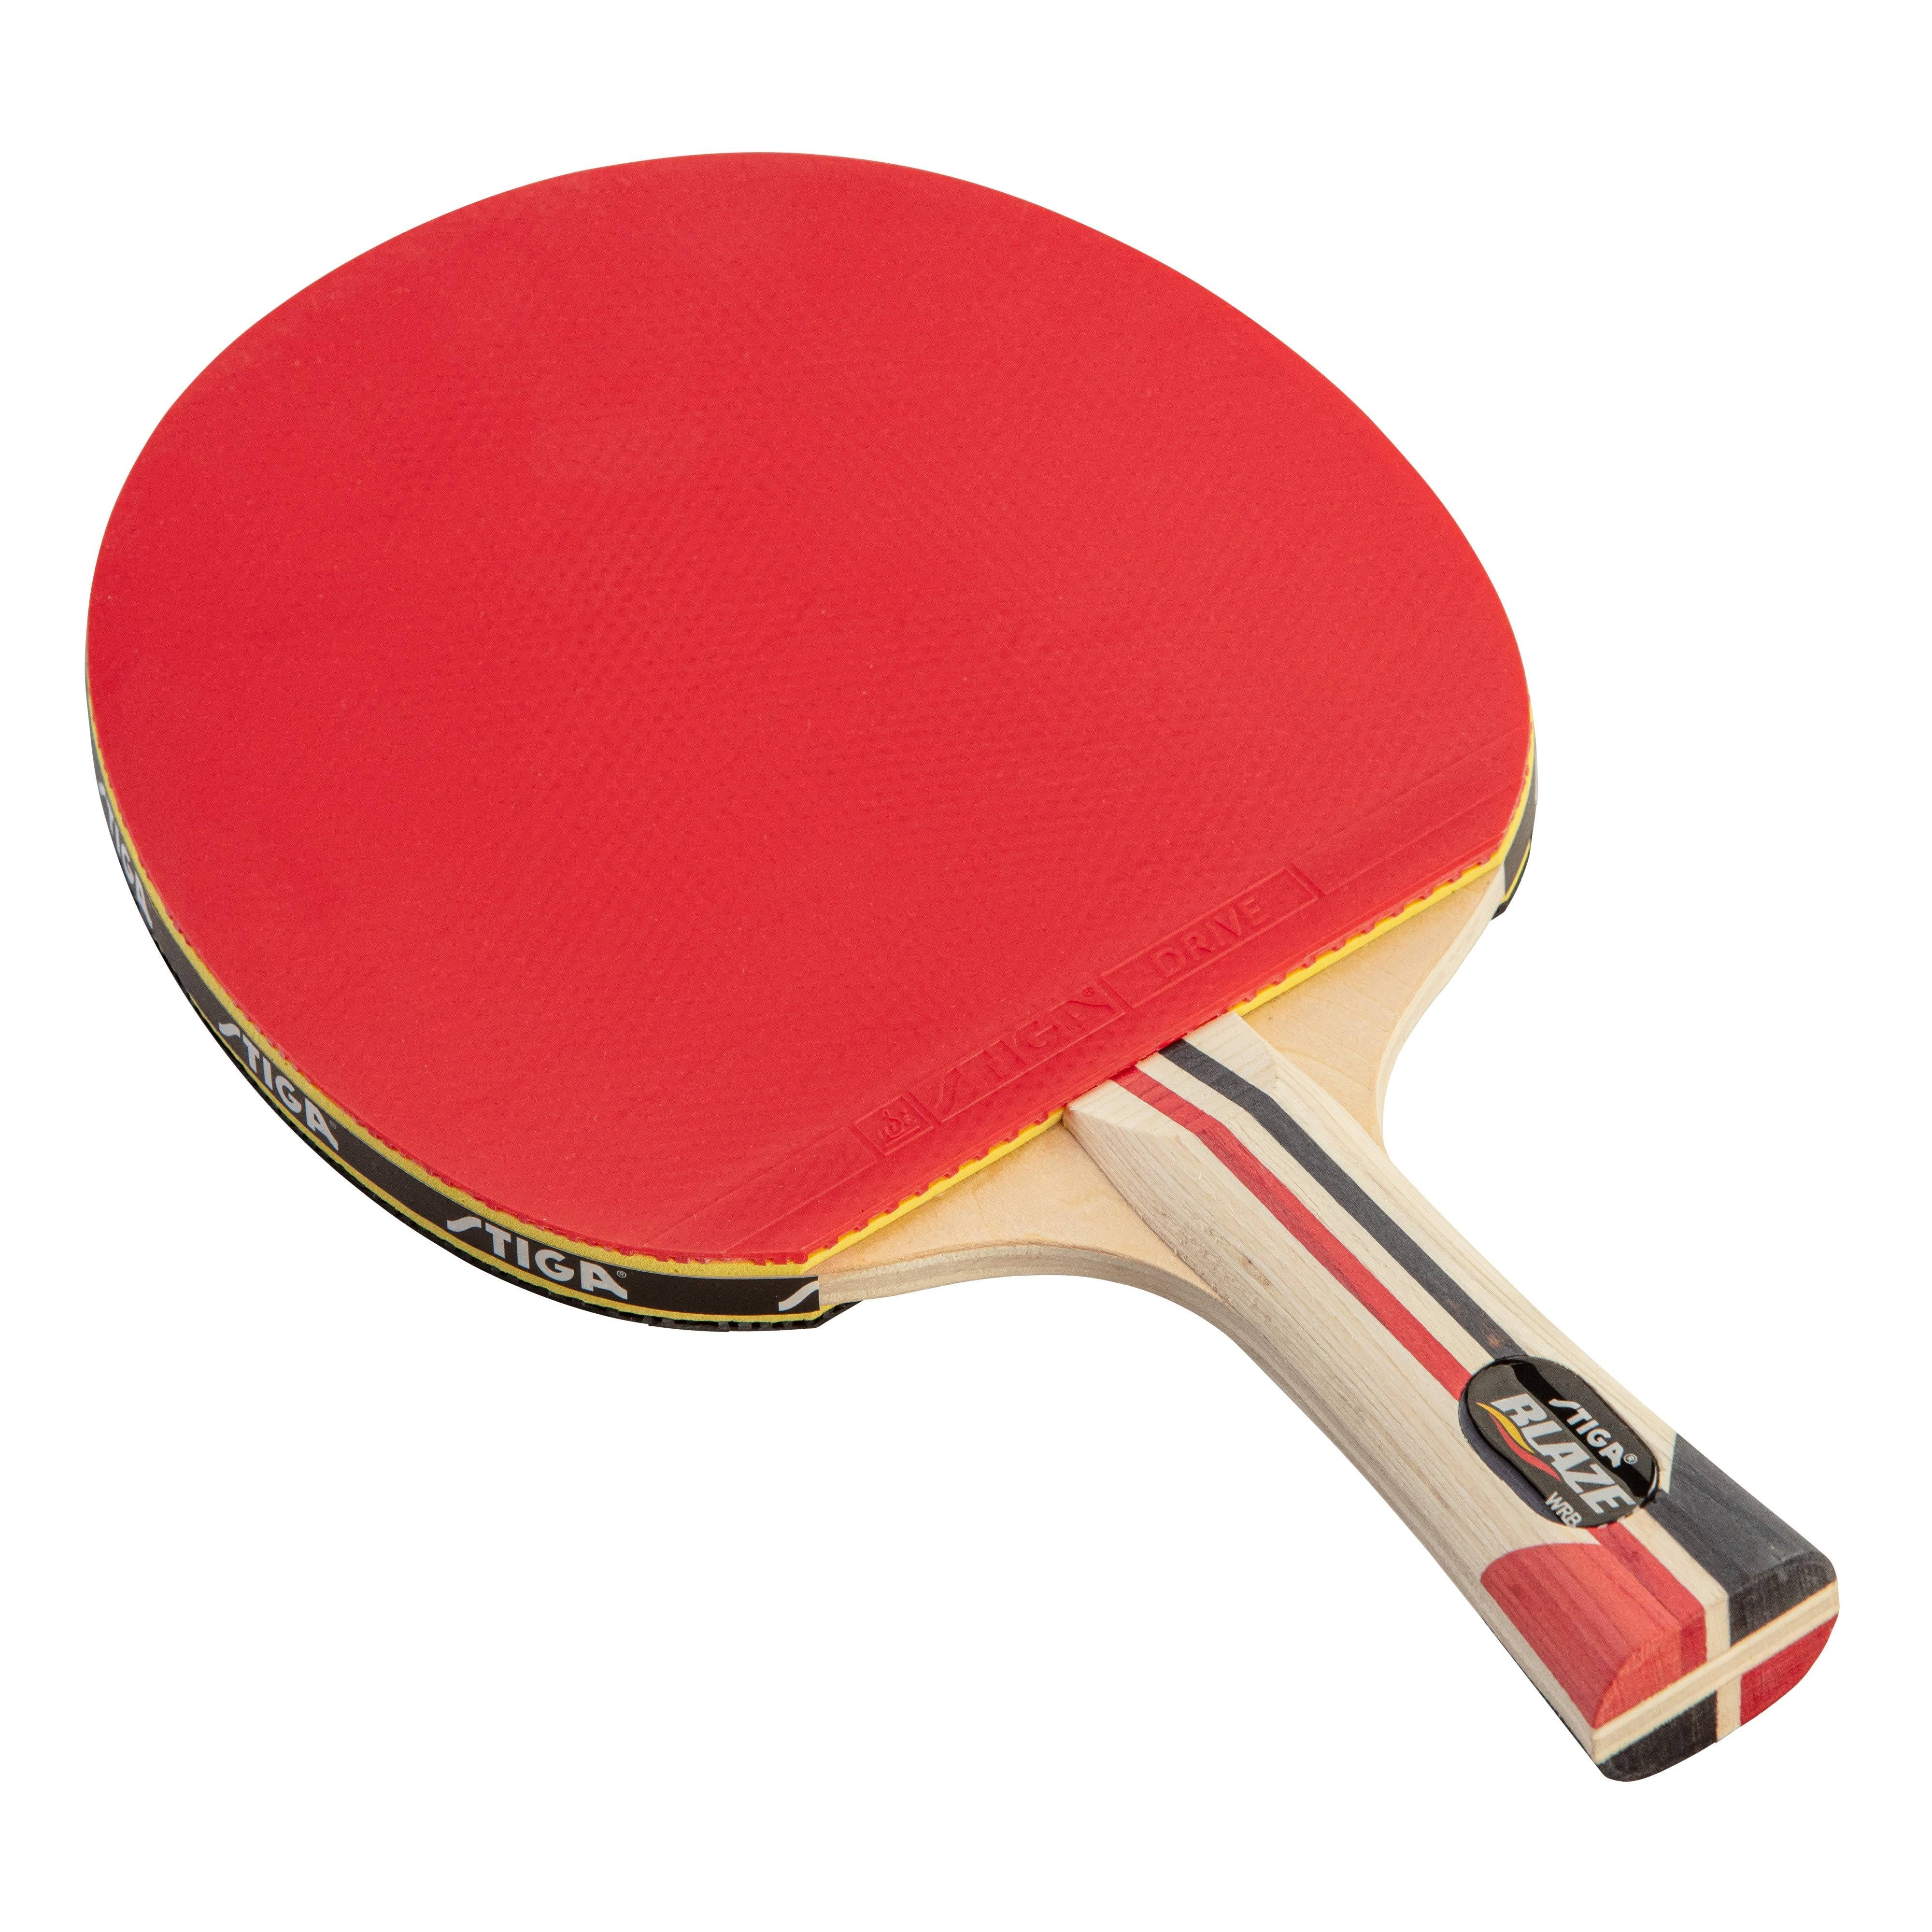 STIGA Blaze Table Tennis Paddle